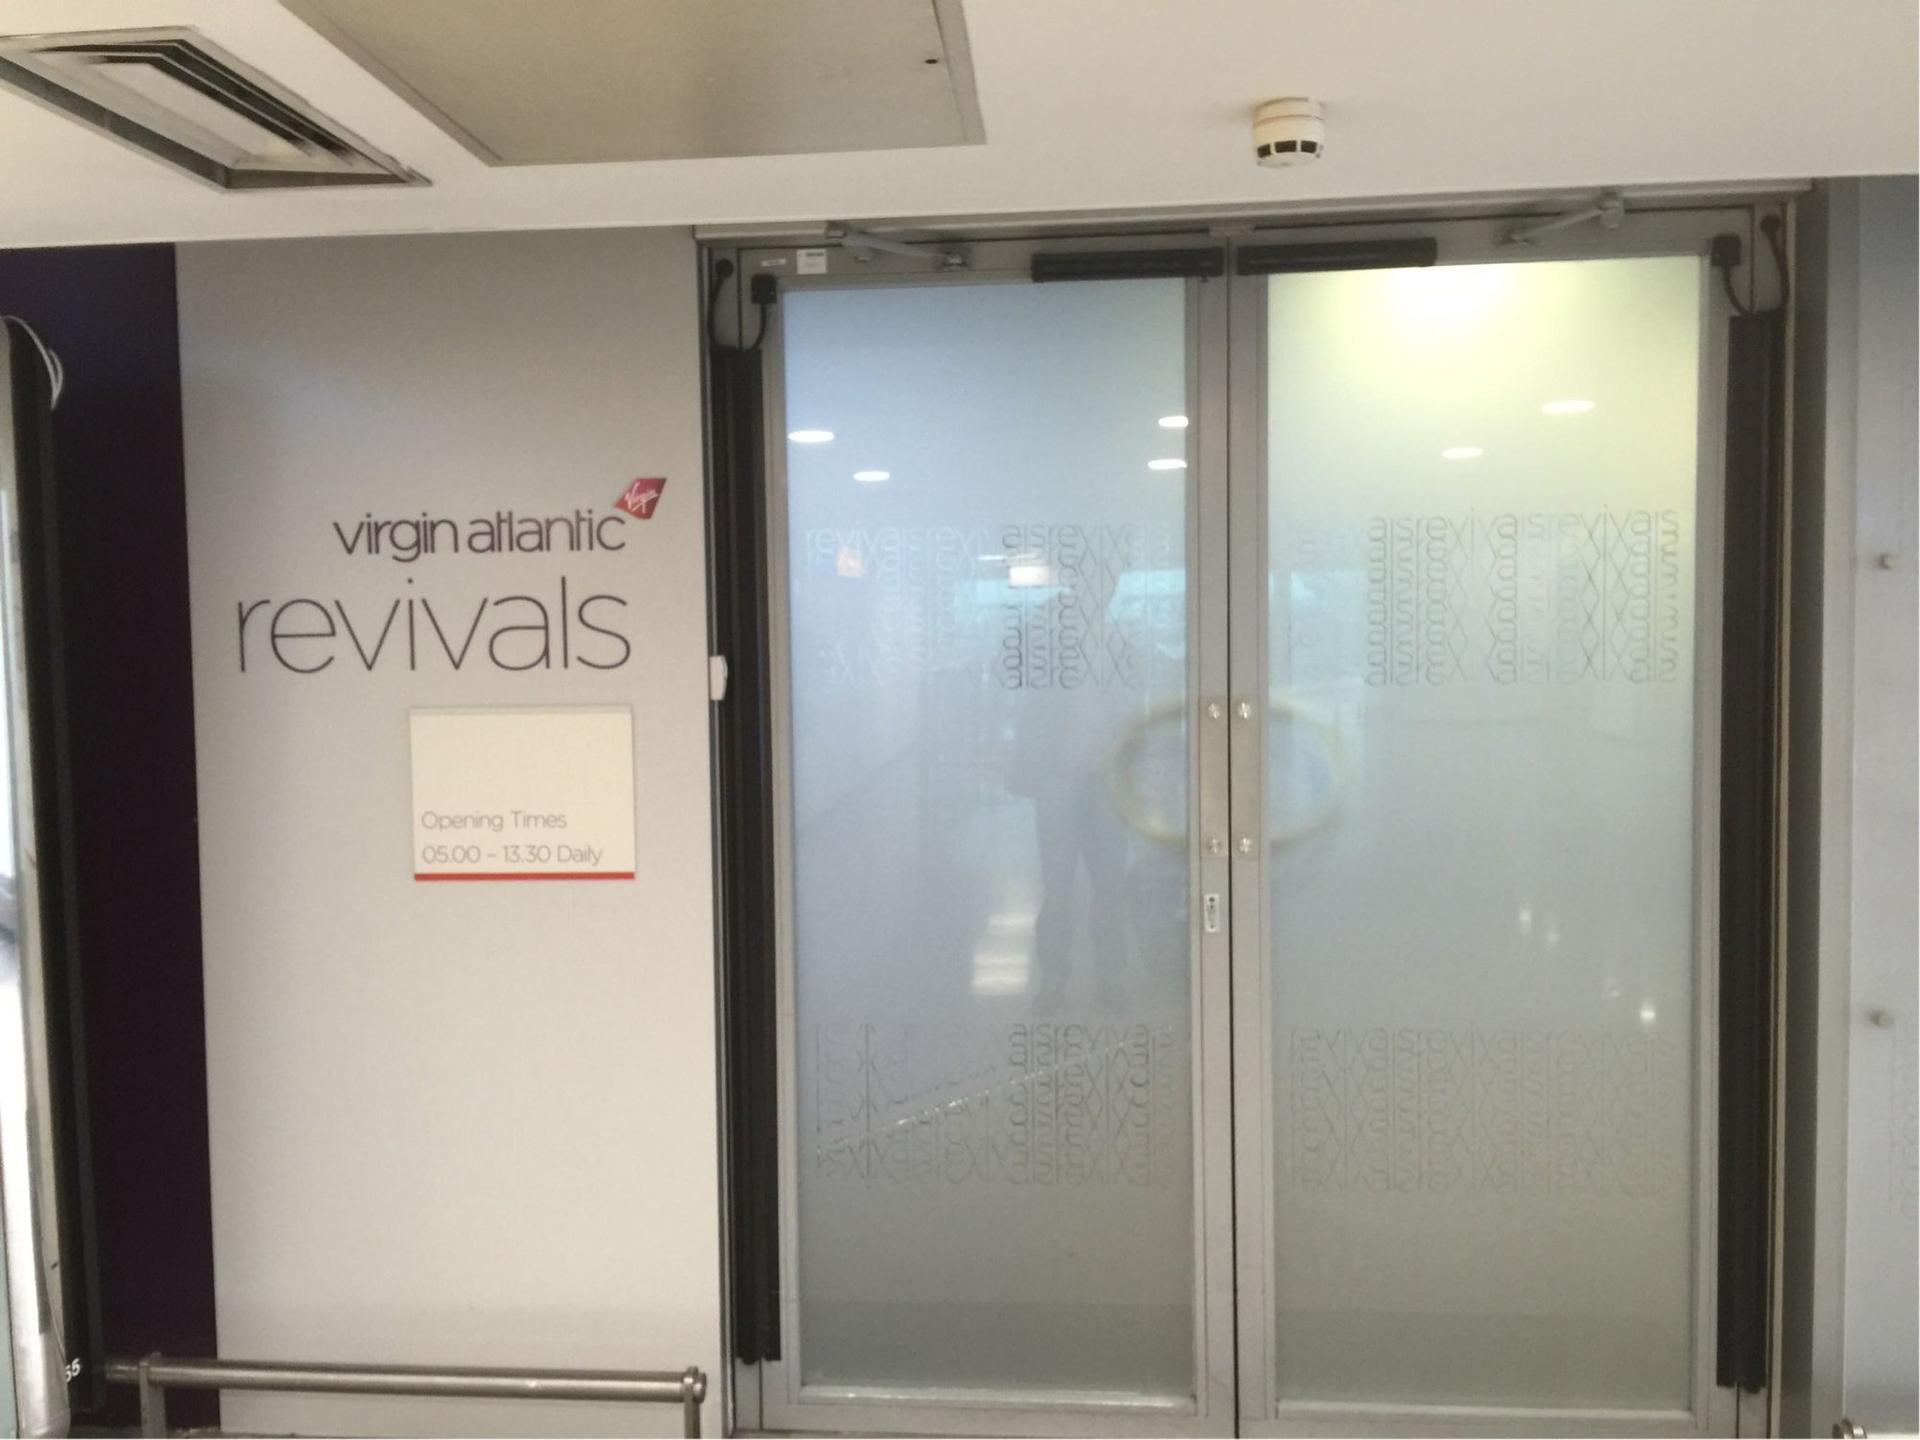 Virgin Atlantic Revivals Lounge image 5 of 10